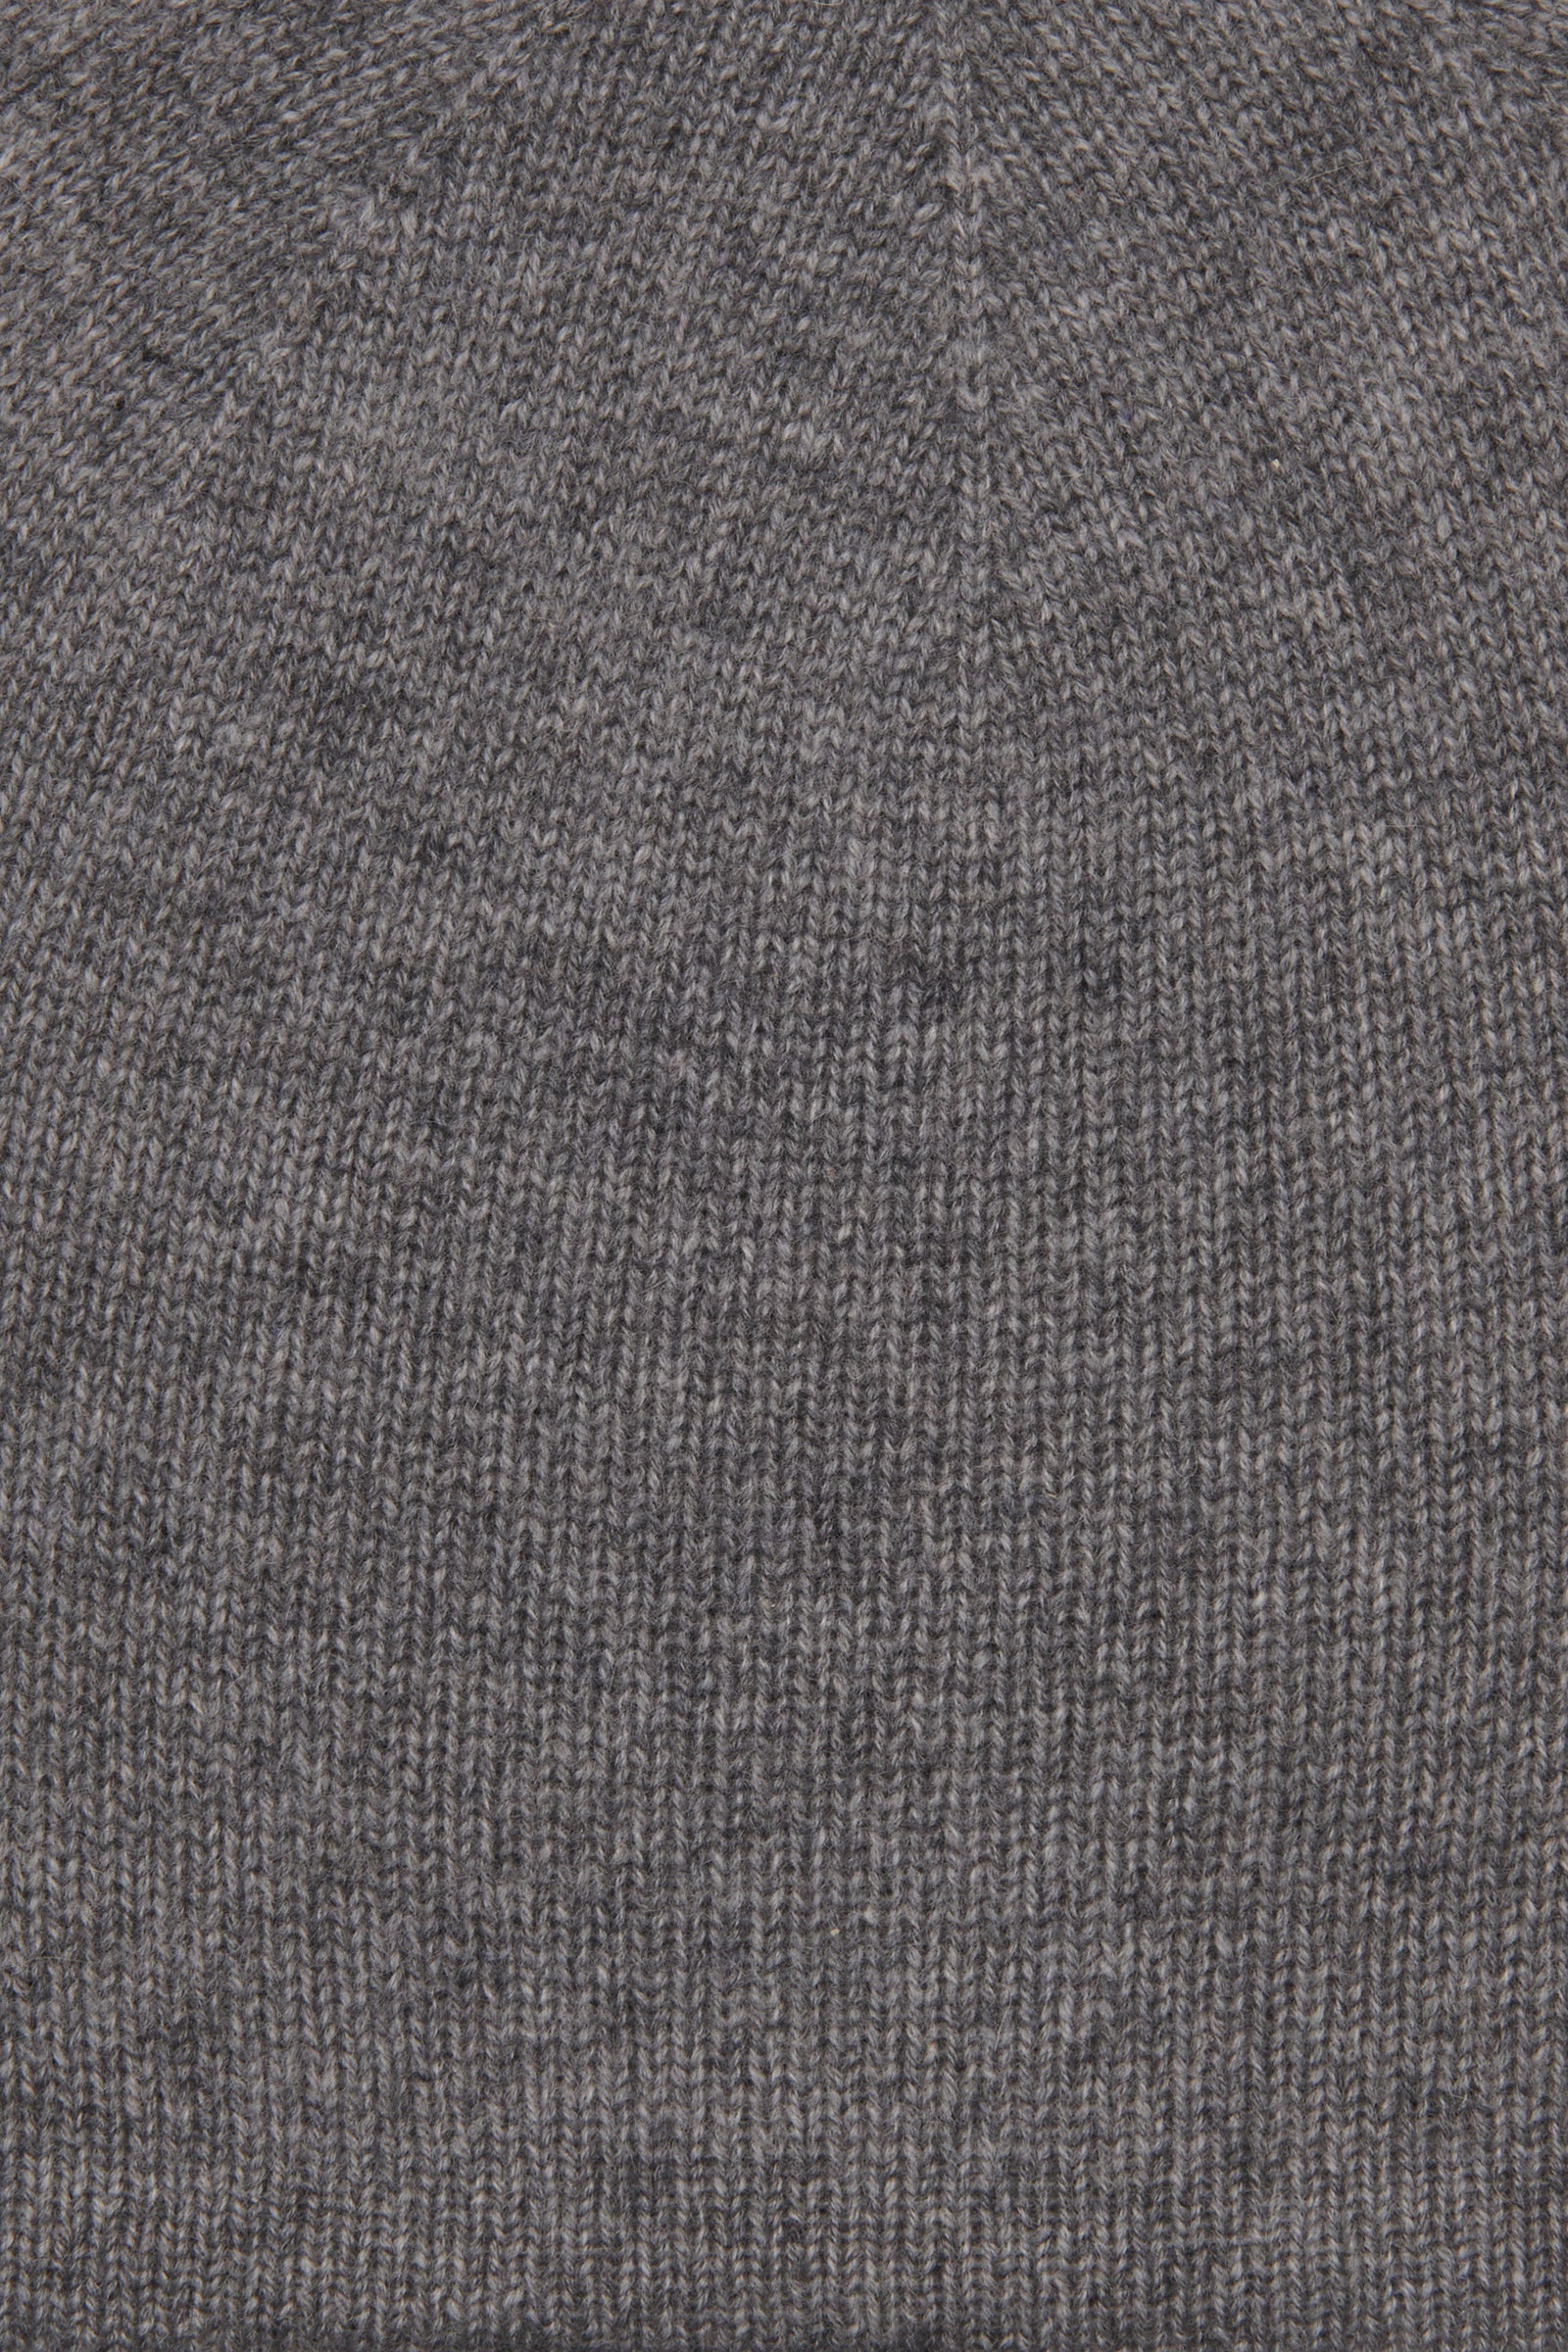 Kal Rieman Cashmere Swatch in Flannel Grey 